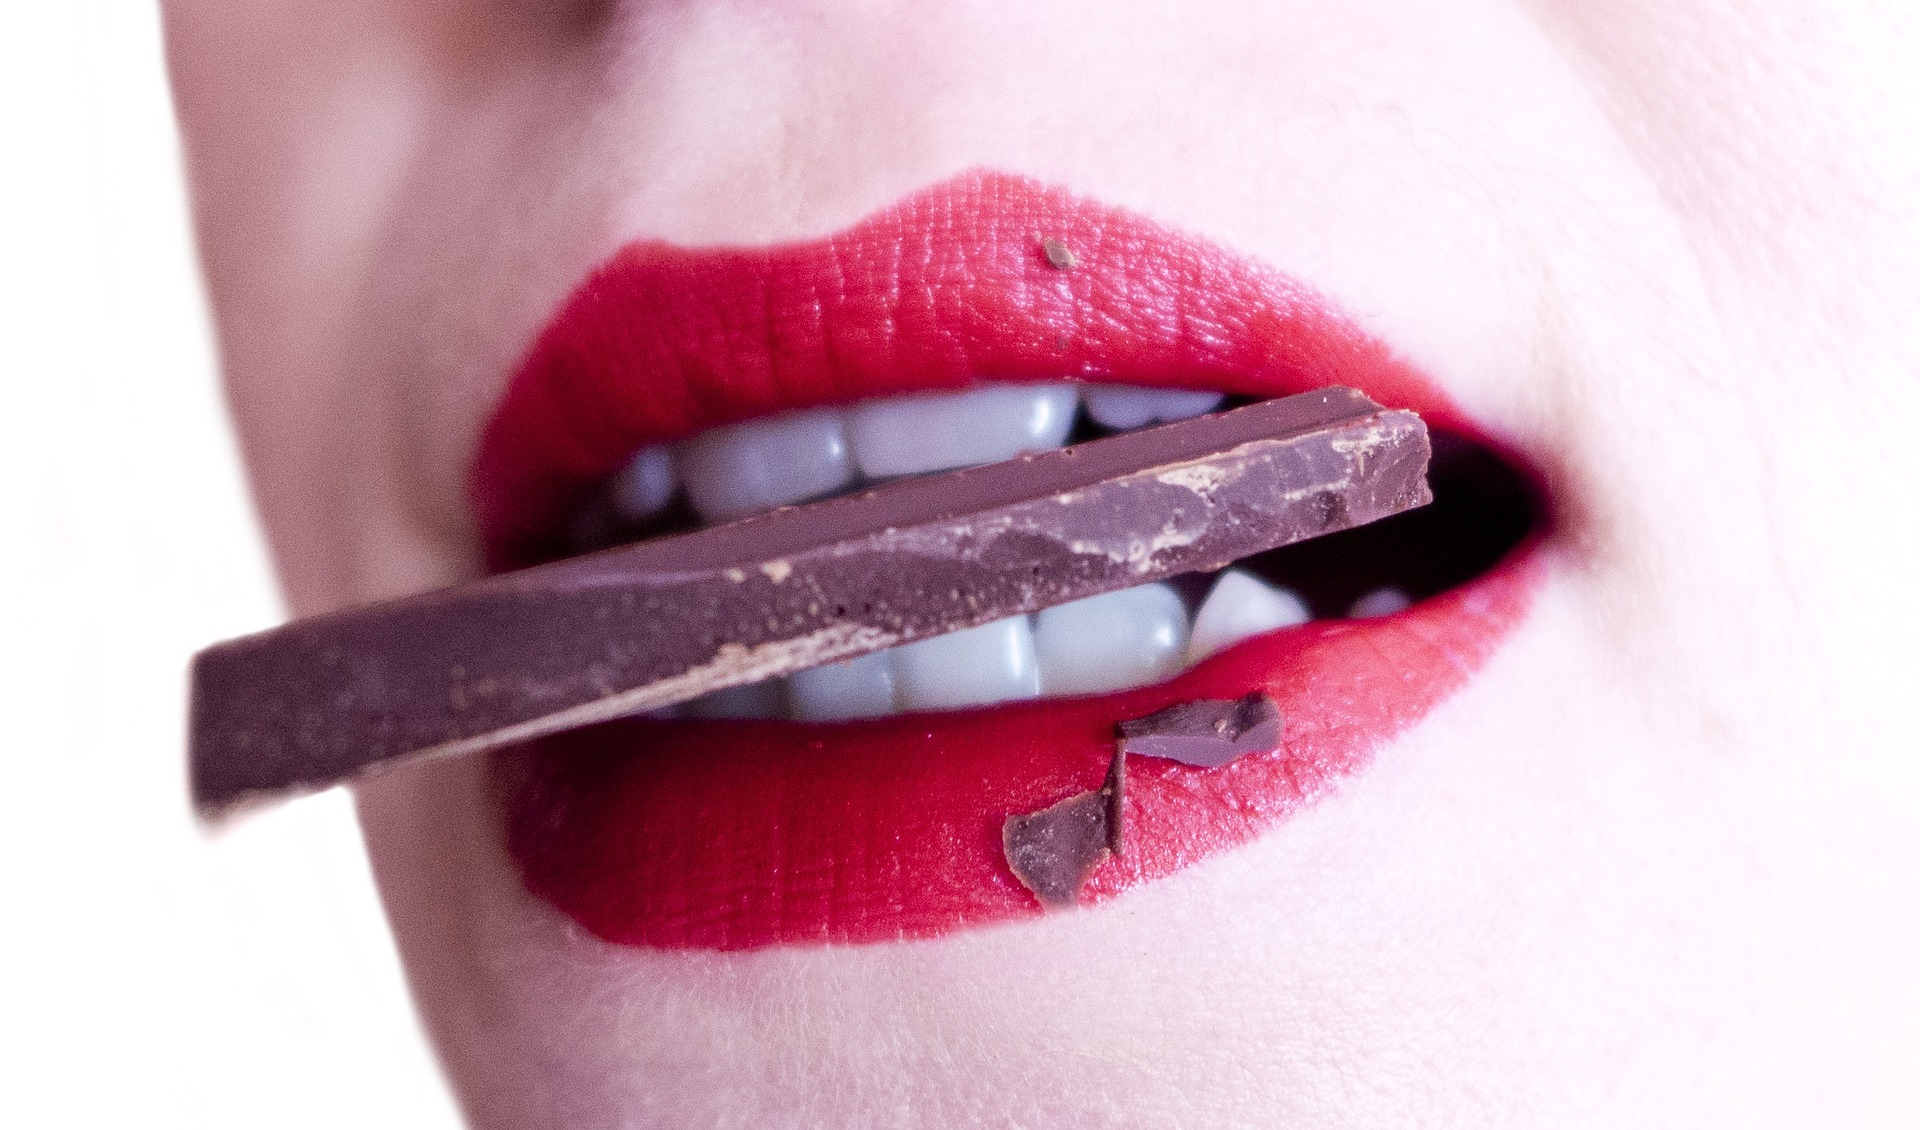 chocolate being eaten